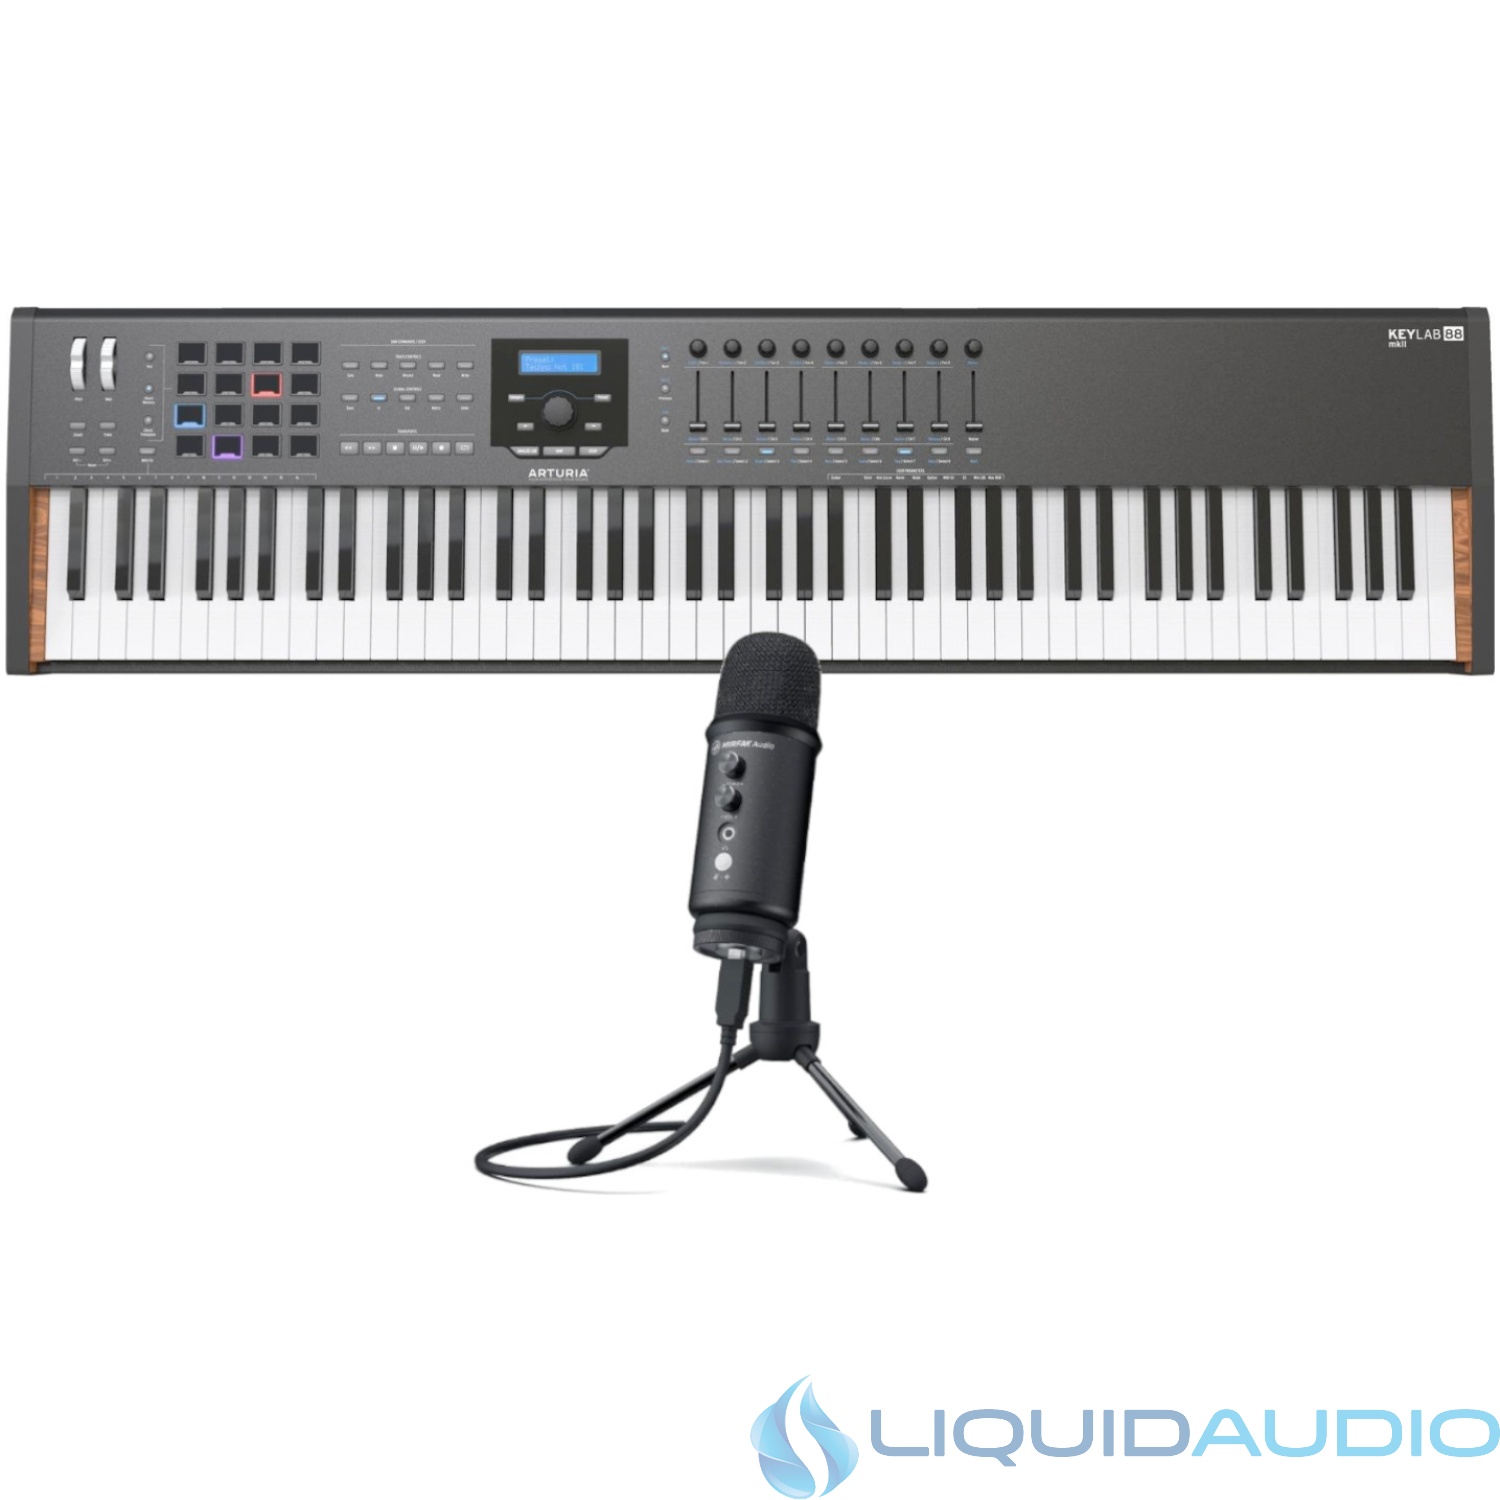 Arturia Keylab MKII 88 Keyboard (BLACK) + Mirfak TU1 USB Microphone BUNDLE